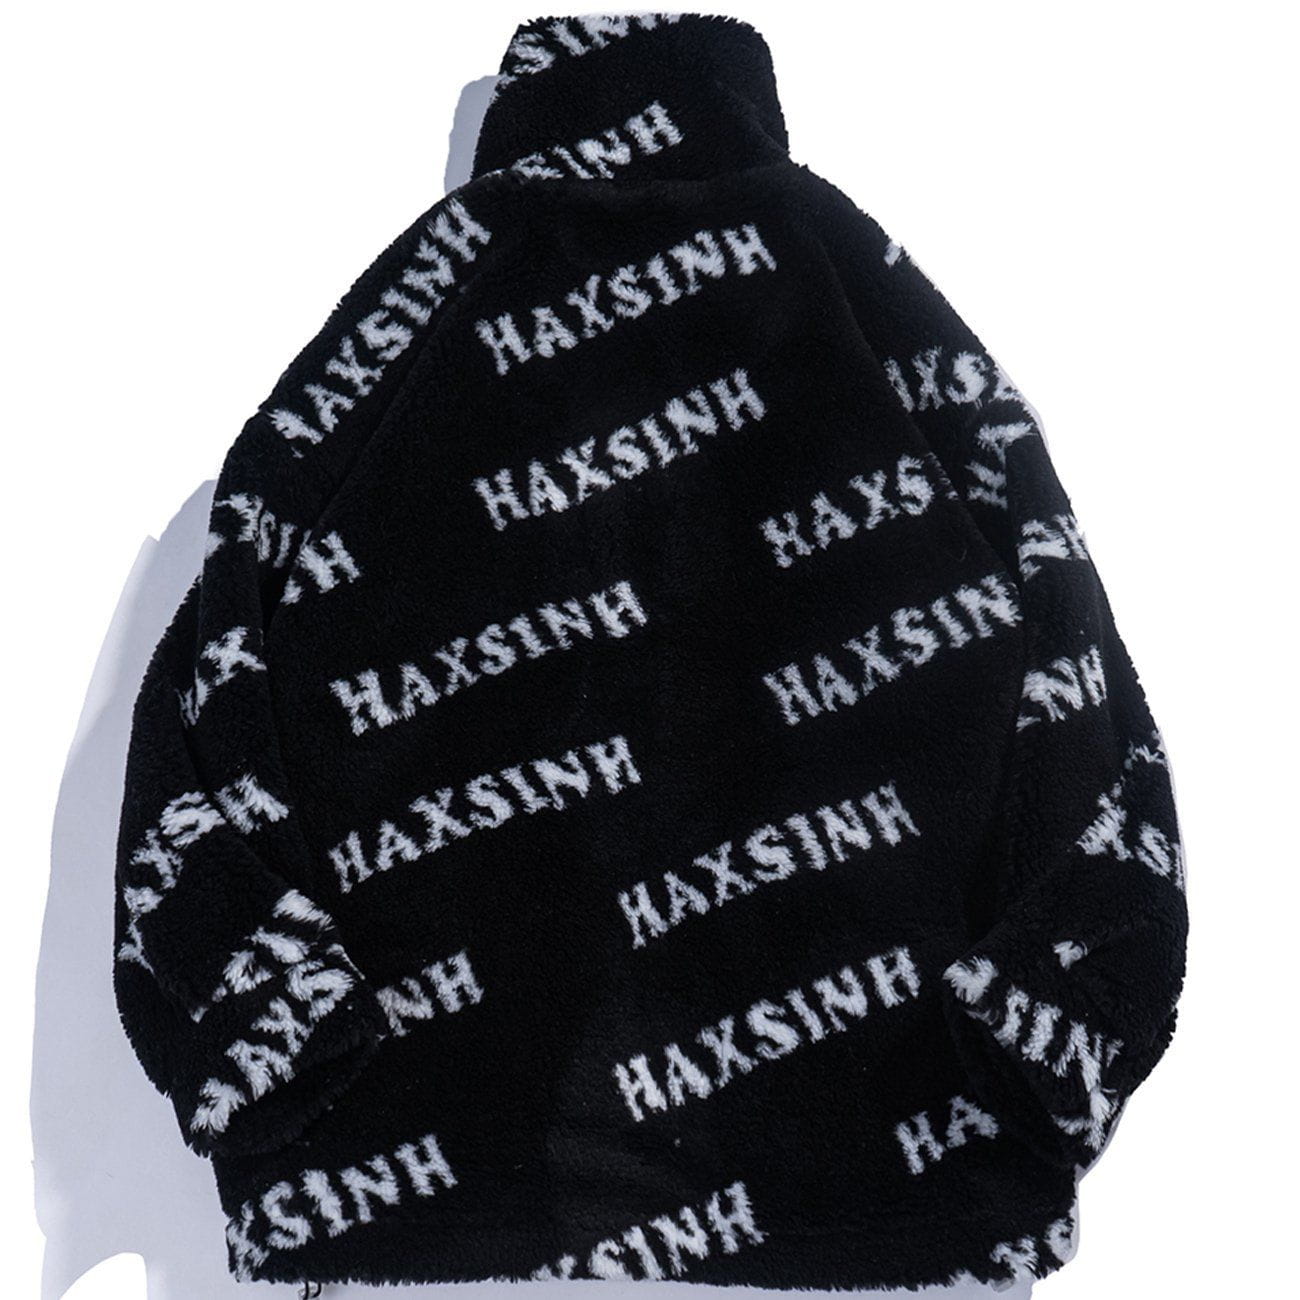 Majesda® - Letters Full Print Sherpa Winter Coat outfit ideas streetwear fashion